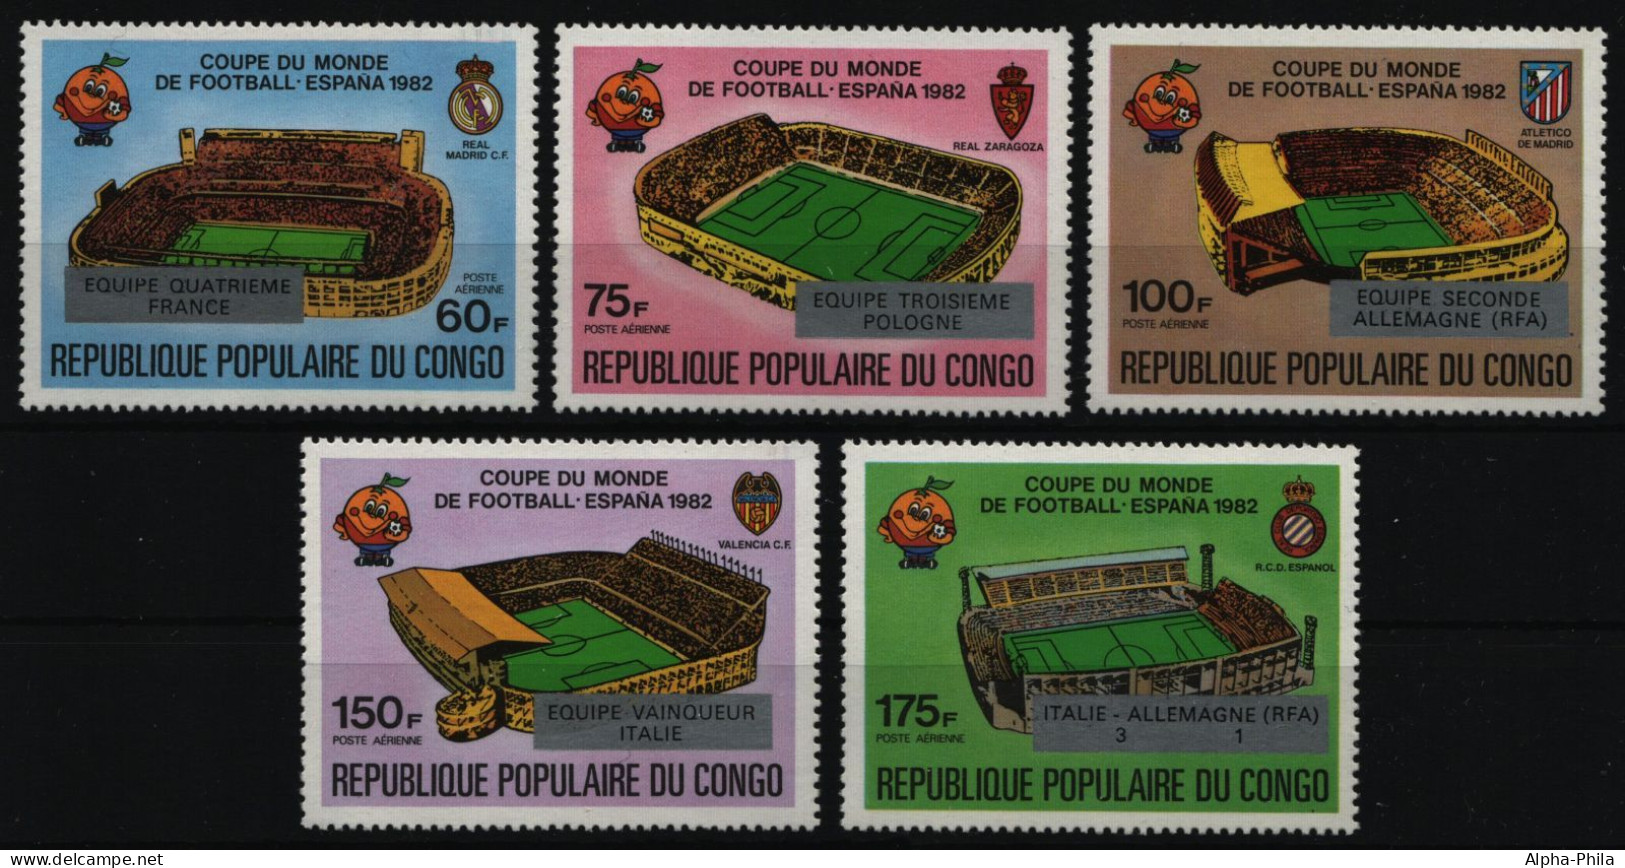 Kongo-Brazzaville 1982 - Mi-Nr. 883-887 ** - MNH - Fußball / Soccer - Mint/hinged